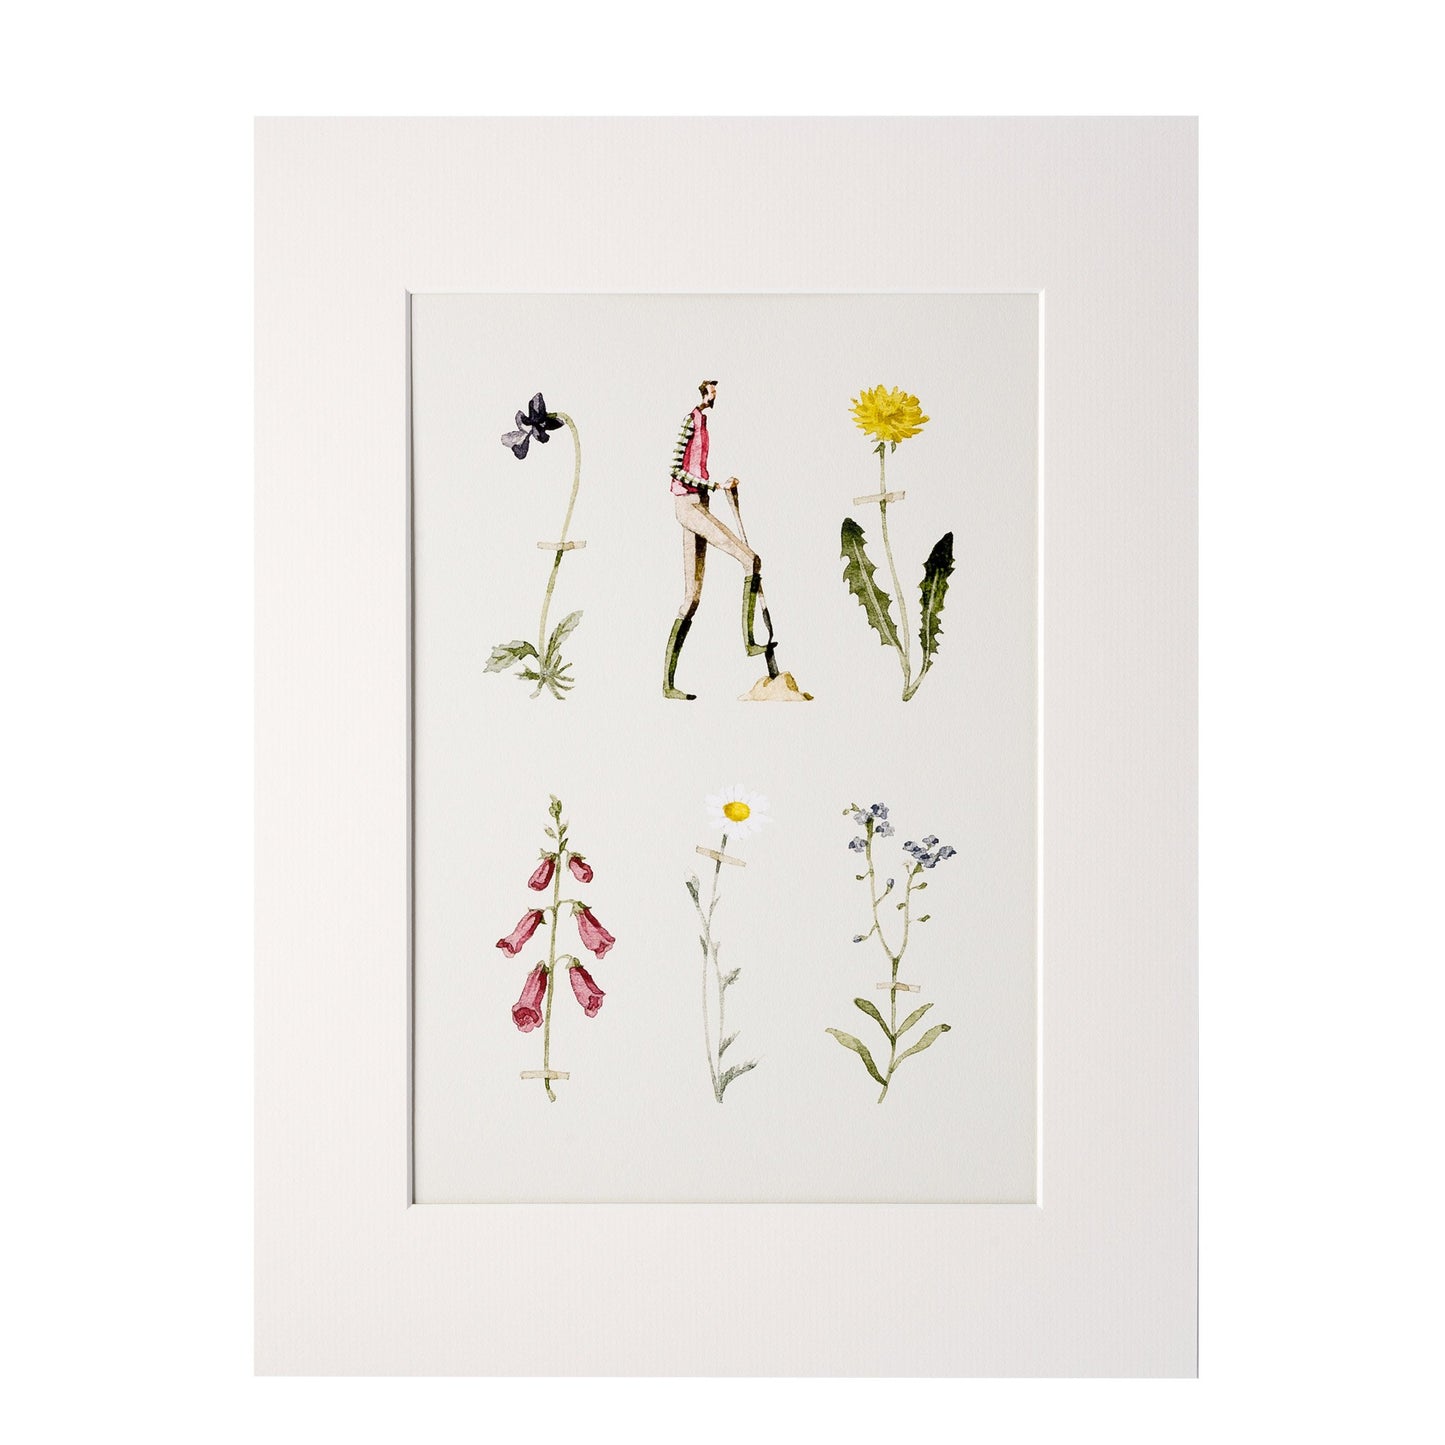 giclee print, mounted print, print, wild flowers, flowers, gentleman gardener, illustration, made in england, archival paper, art print